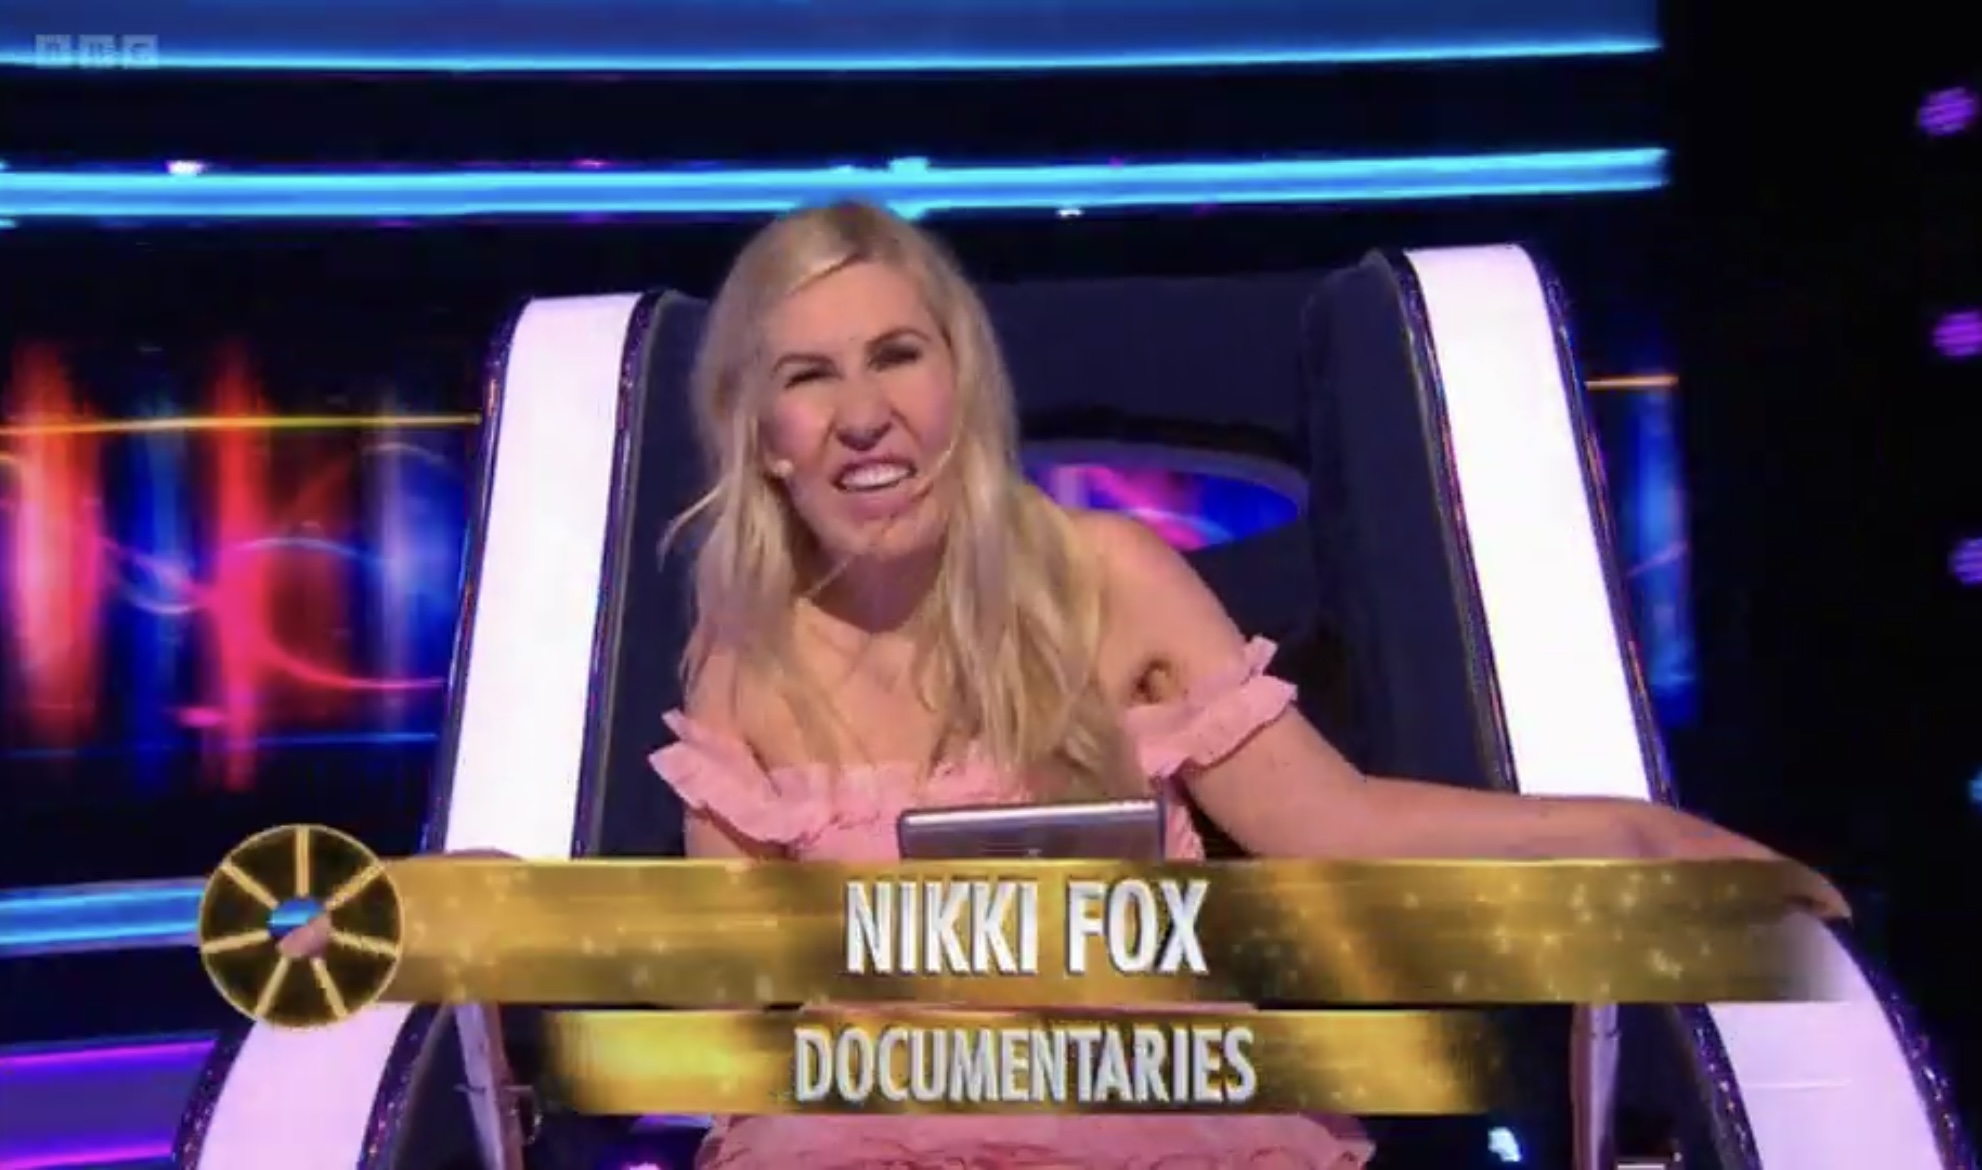 Nikki Fox